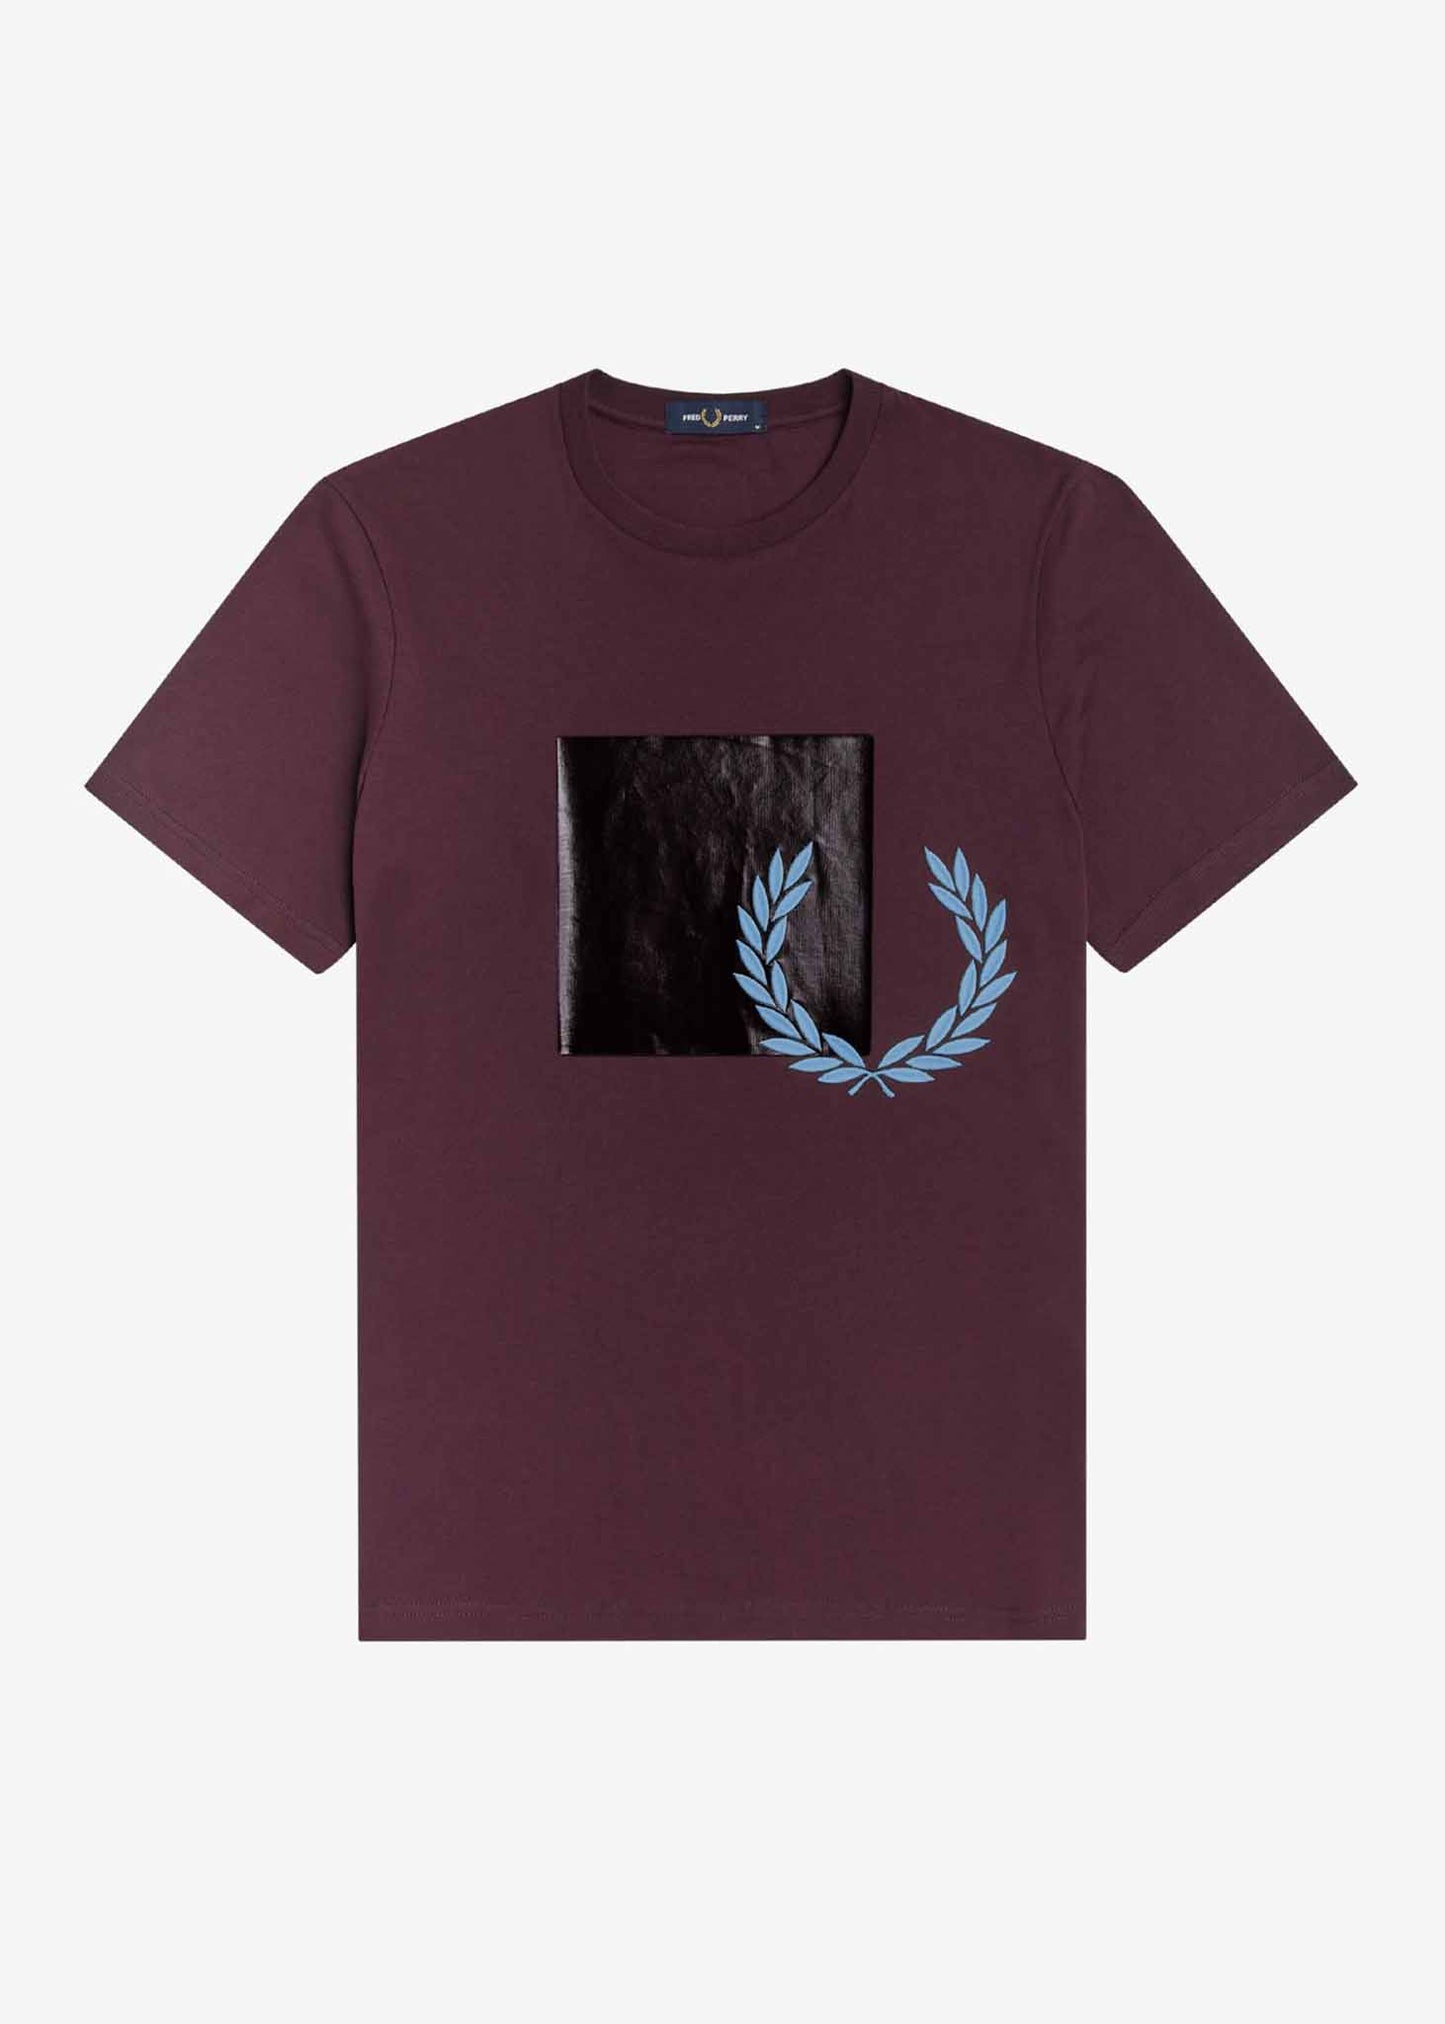 Tonal graphic t-shirt - mahogany